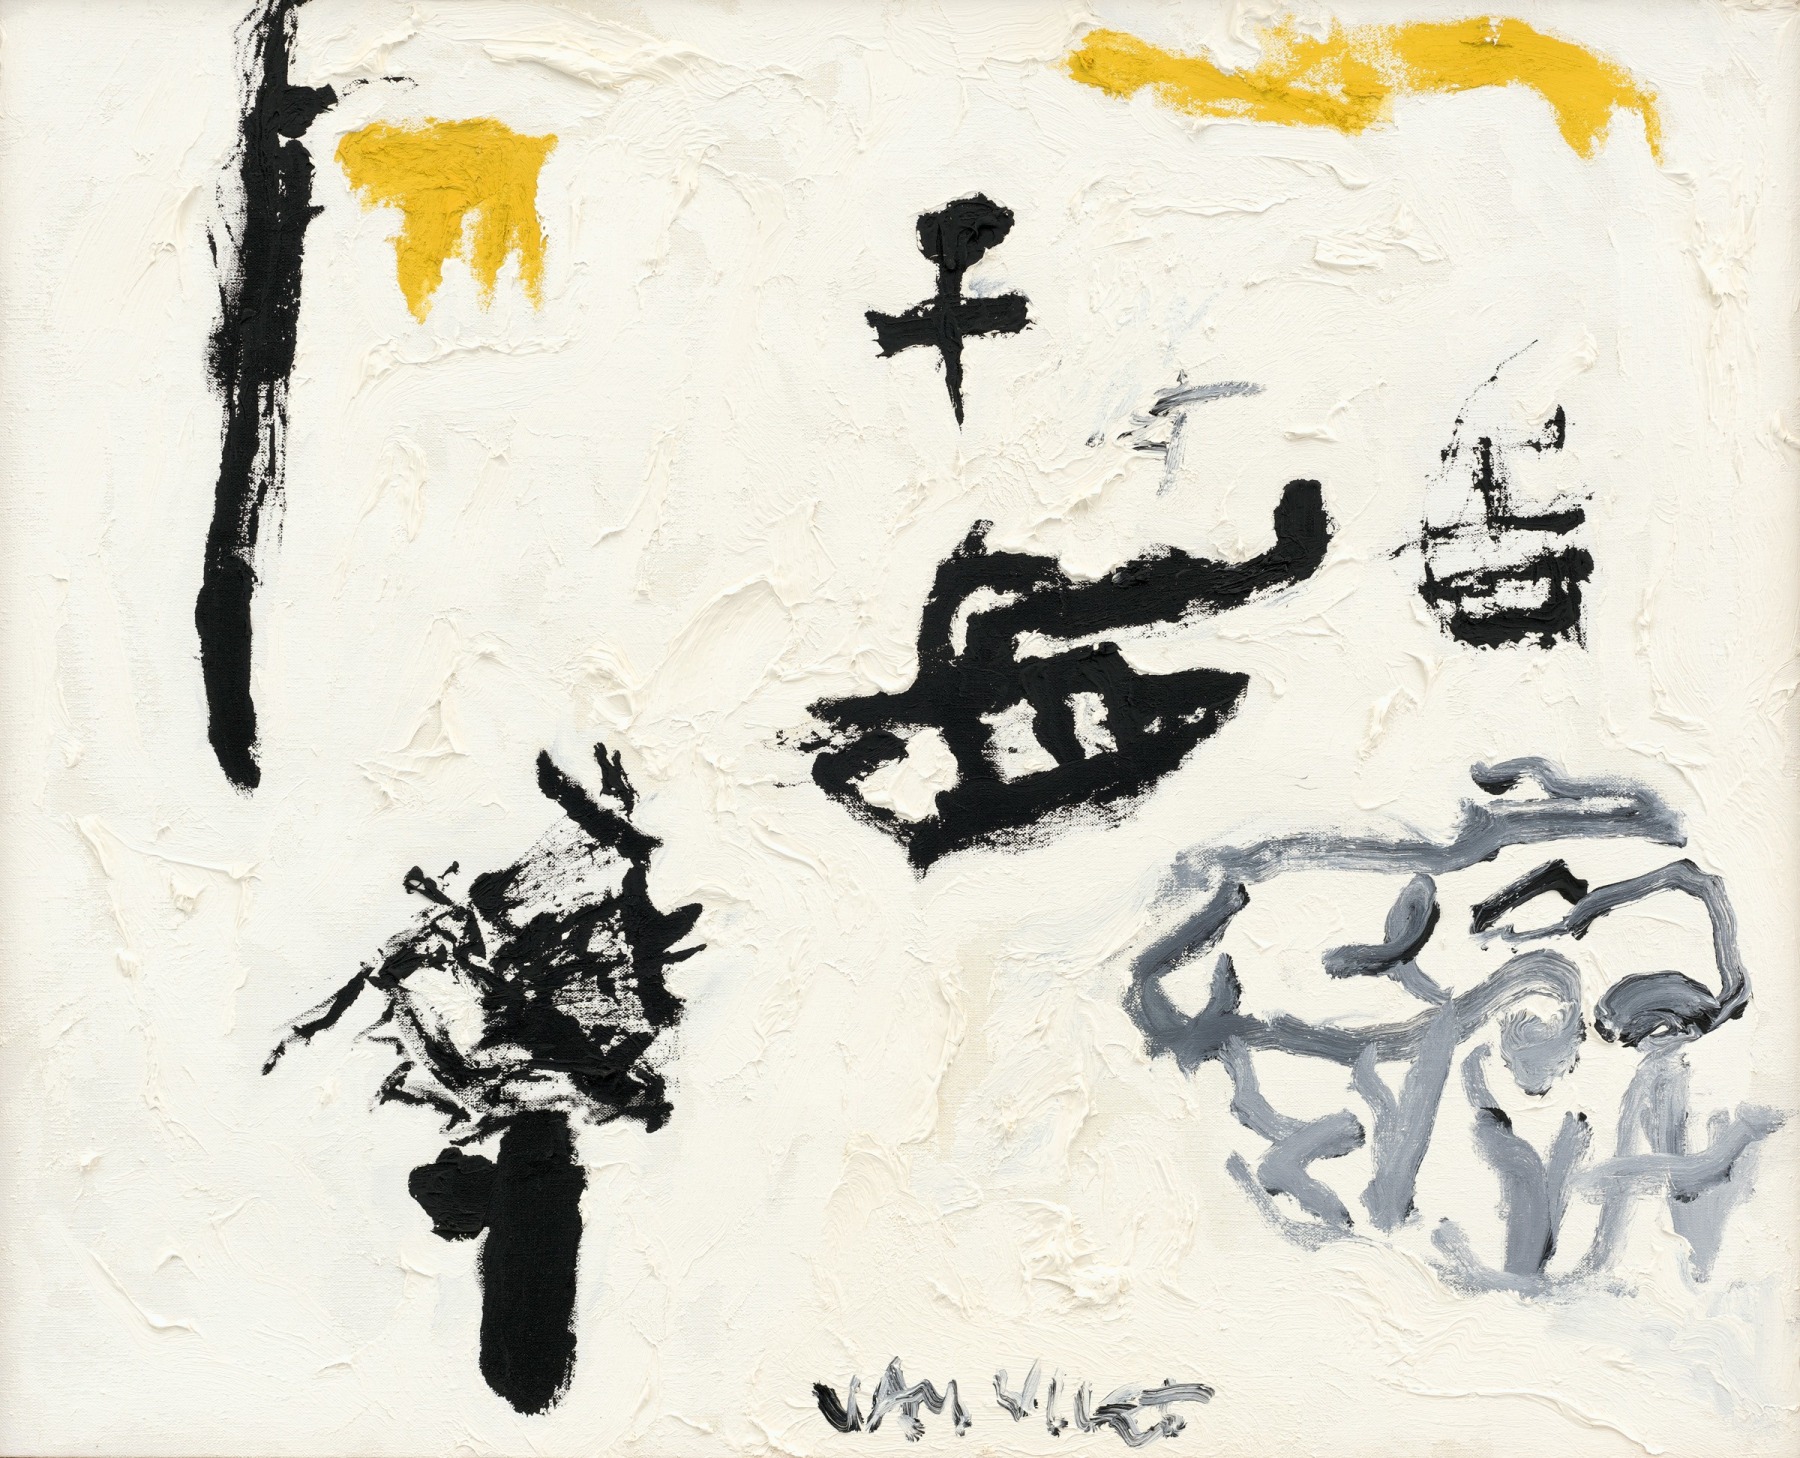 Don Van Vliet

&amp;ldquo;Untitled #3&amp;rdquo;, 1994

Oil on linen

32 x 39 1/4 inches

81.5 x 100.5 cm

VLI 159